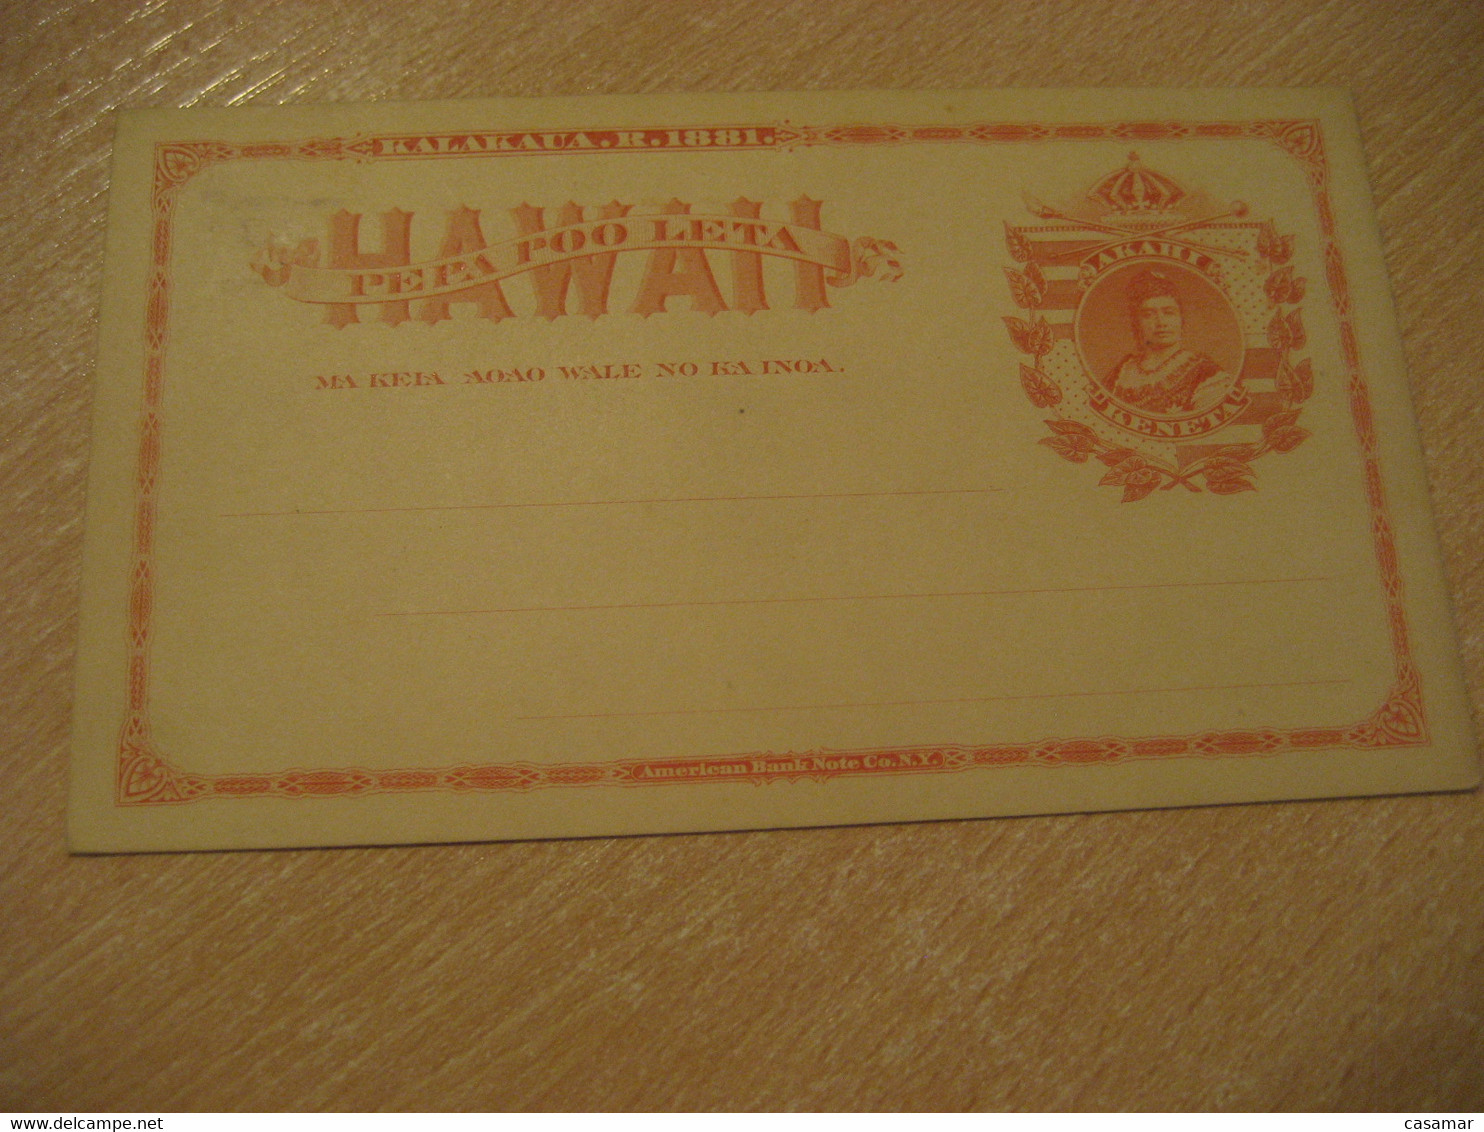 Akahi Keneta Kalakaua 1881 HAWAII Pepa Poo Leta Orange Postal Stationery Card USA - Hawaii